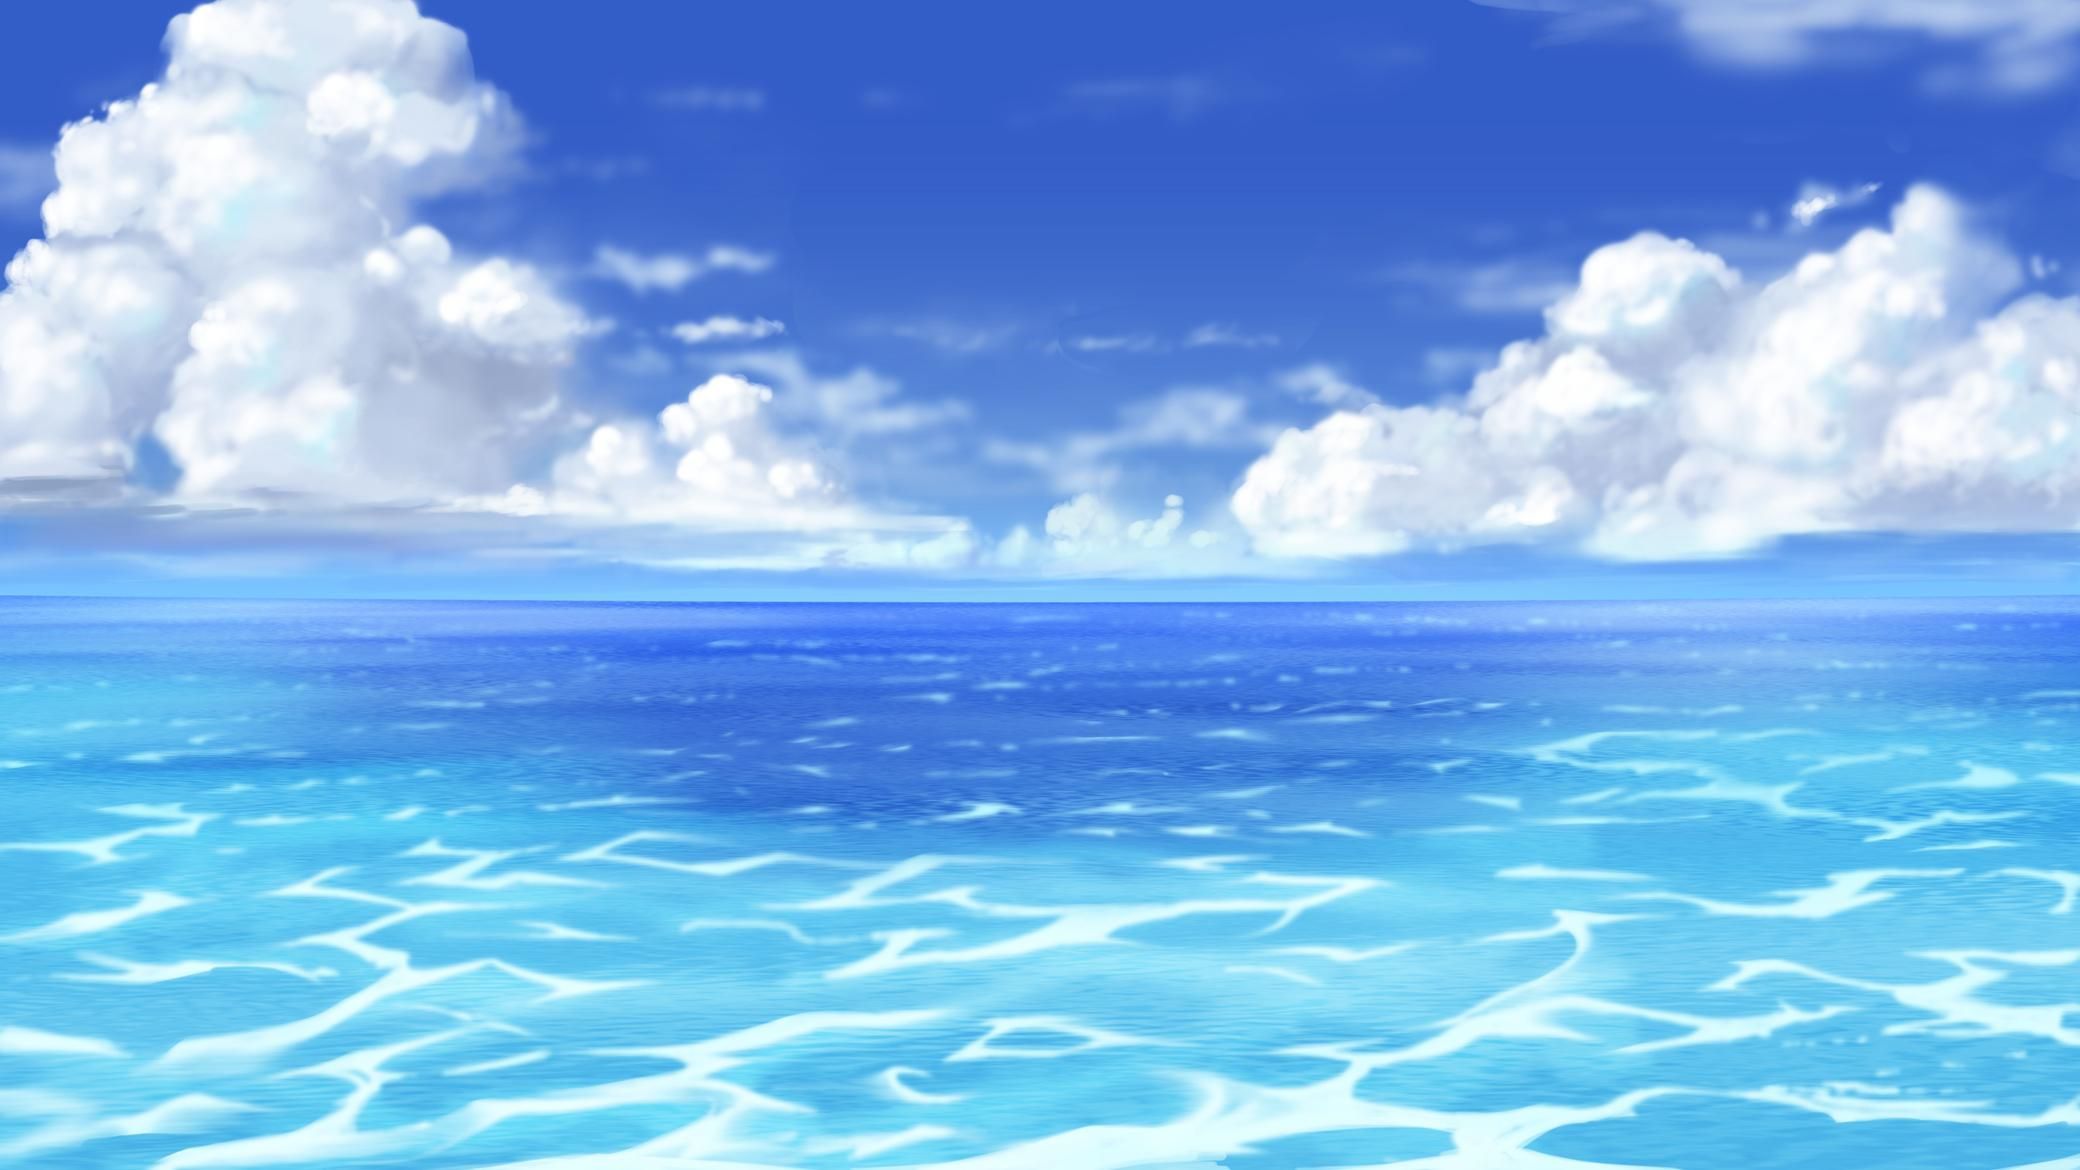 Anime Sea Wallpaper